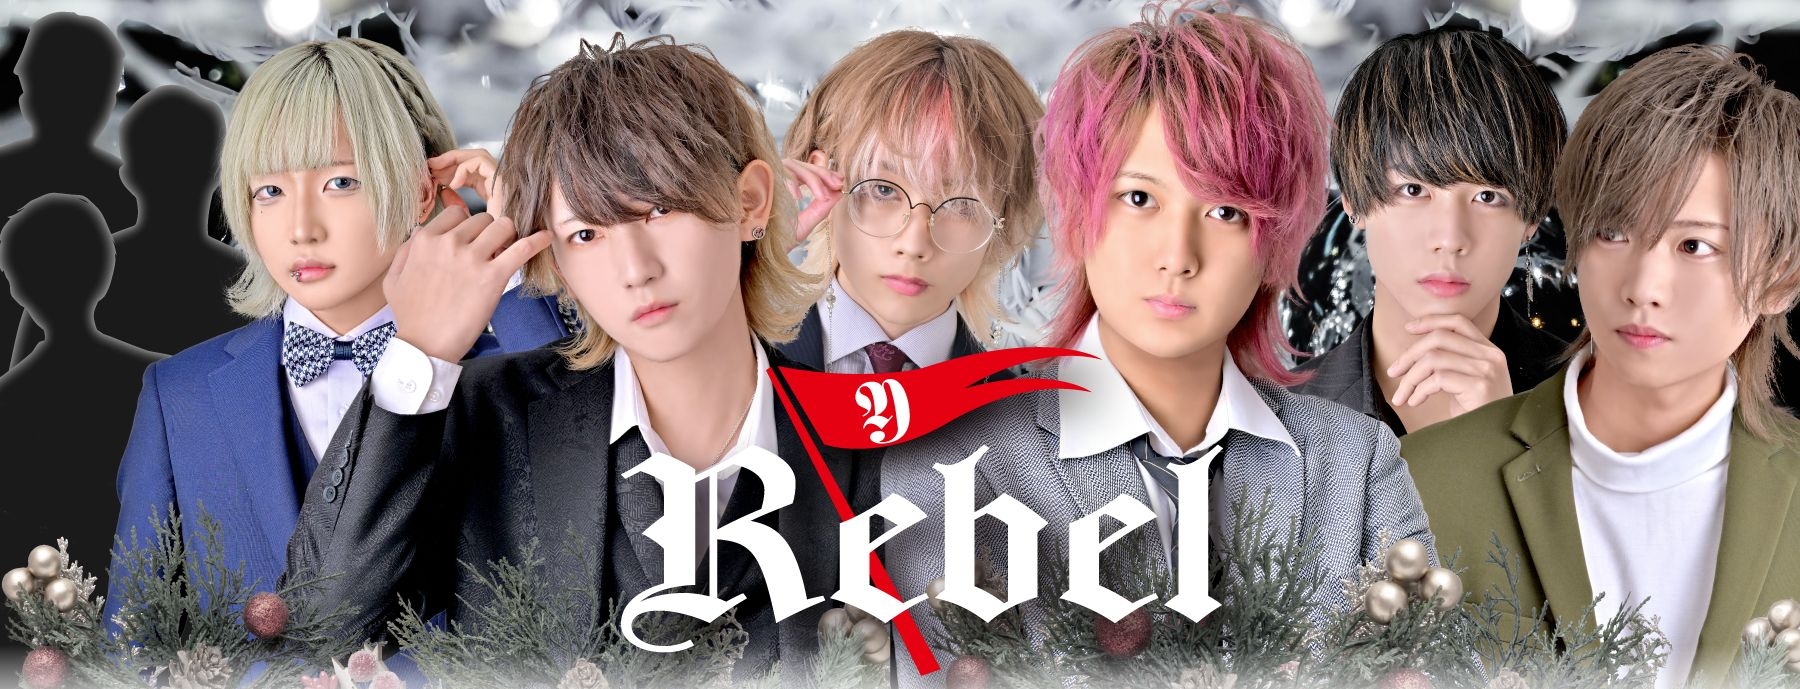 Rebel〜リベル〜